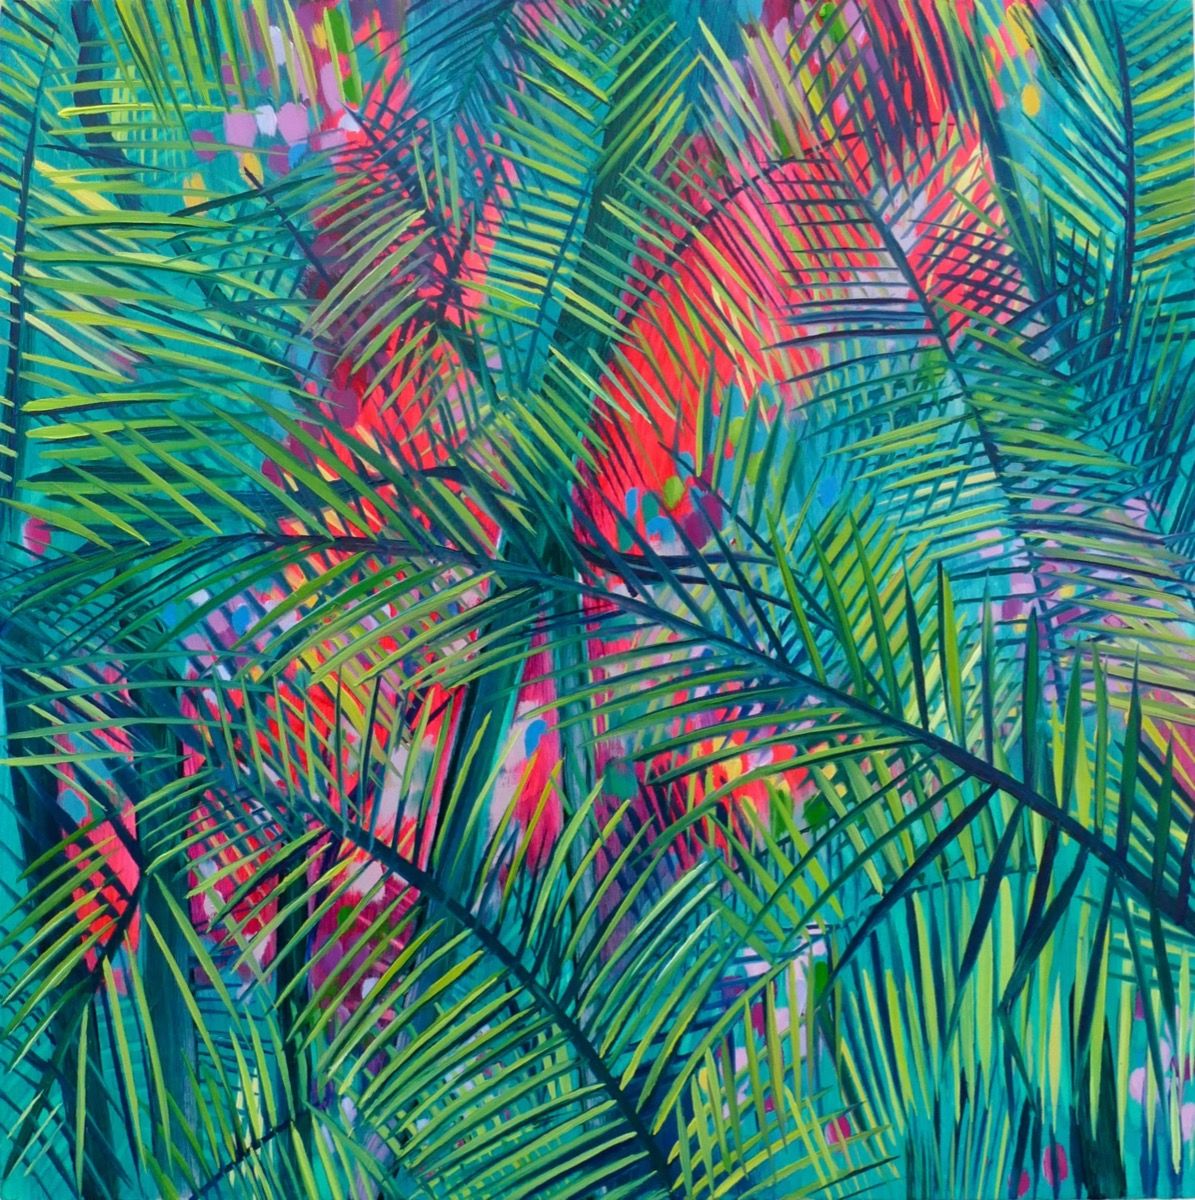 Tropical Garden viii by Alanna Eakin